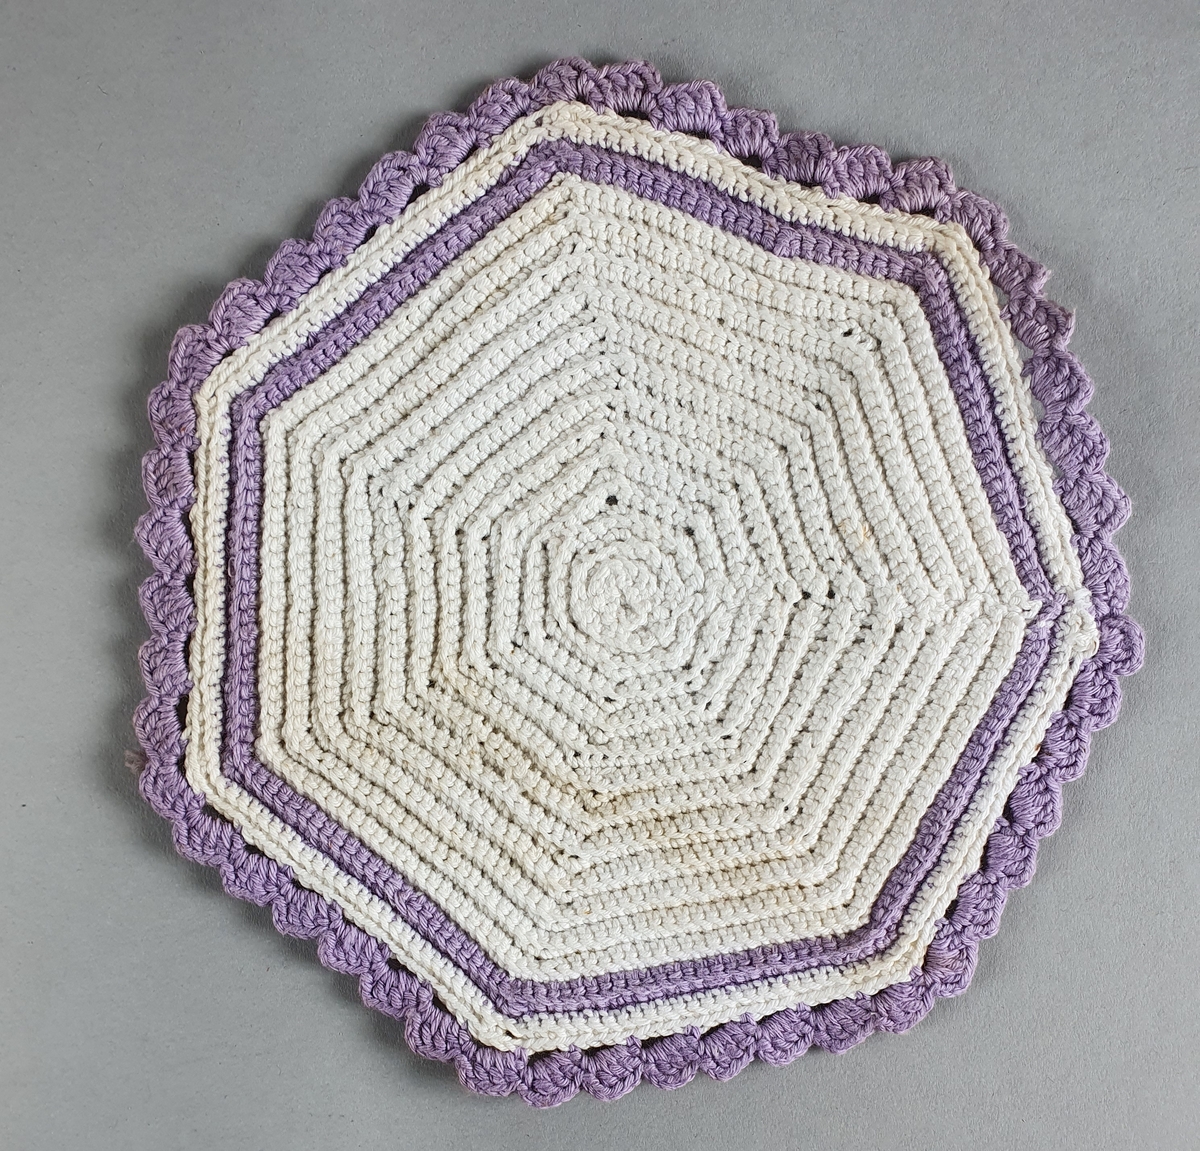 Femkantet - nesten rund - heklet pyntebrikke av bomull med lilla dekorkant.